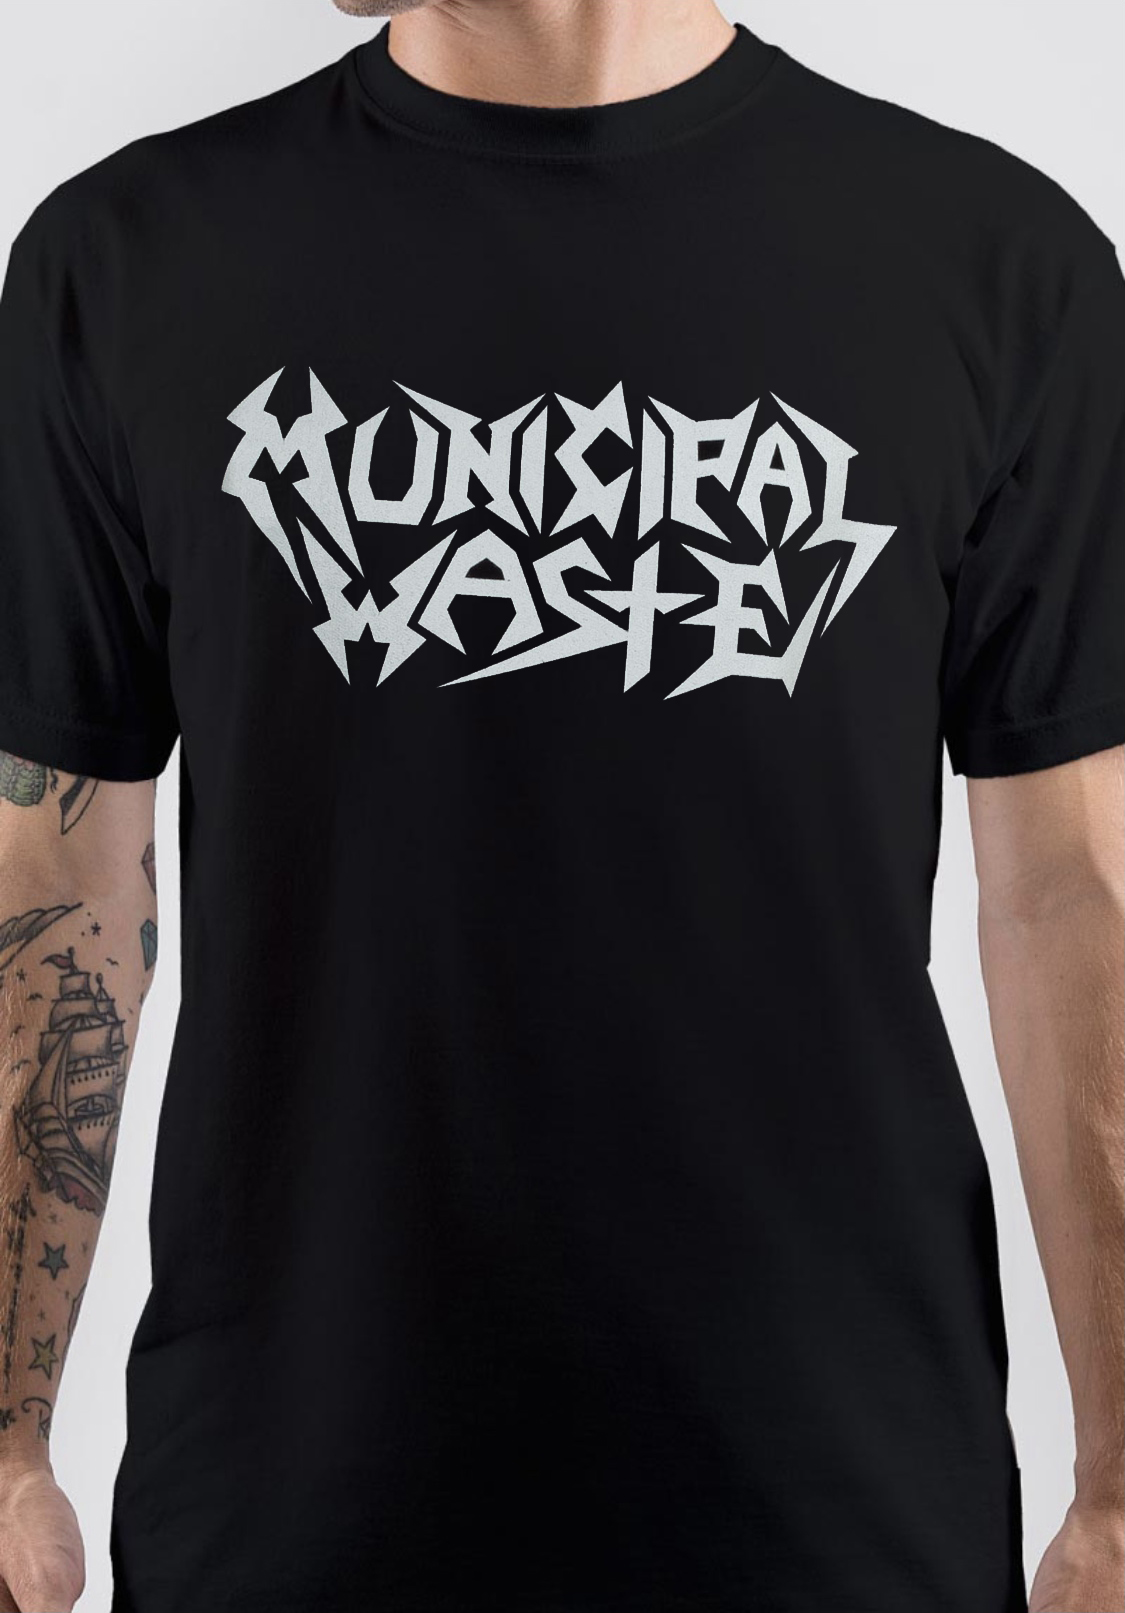 Municipal Waste Band Logo T-Shirt - Supreme Shirts